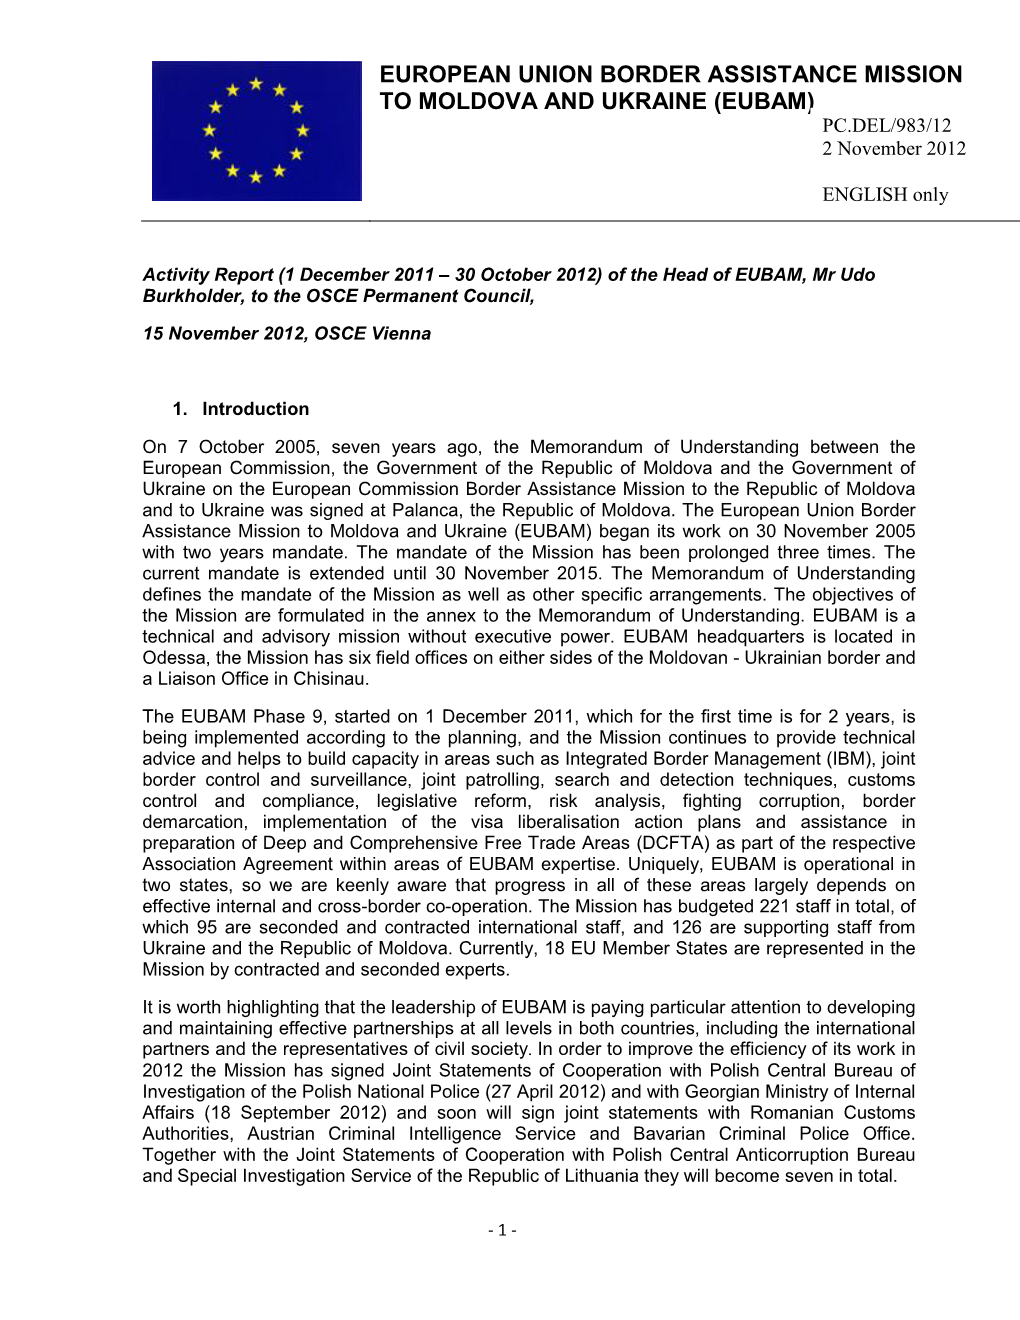 EUROPEAN UNION BORDER ASSISTANCE MISSION to MOLDOVA and UKRAINE (EUBAM) PC.DEL/983/12 2 November 2012